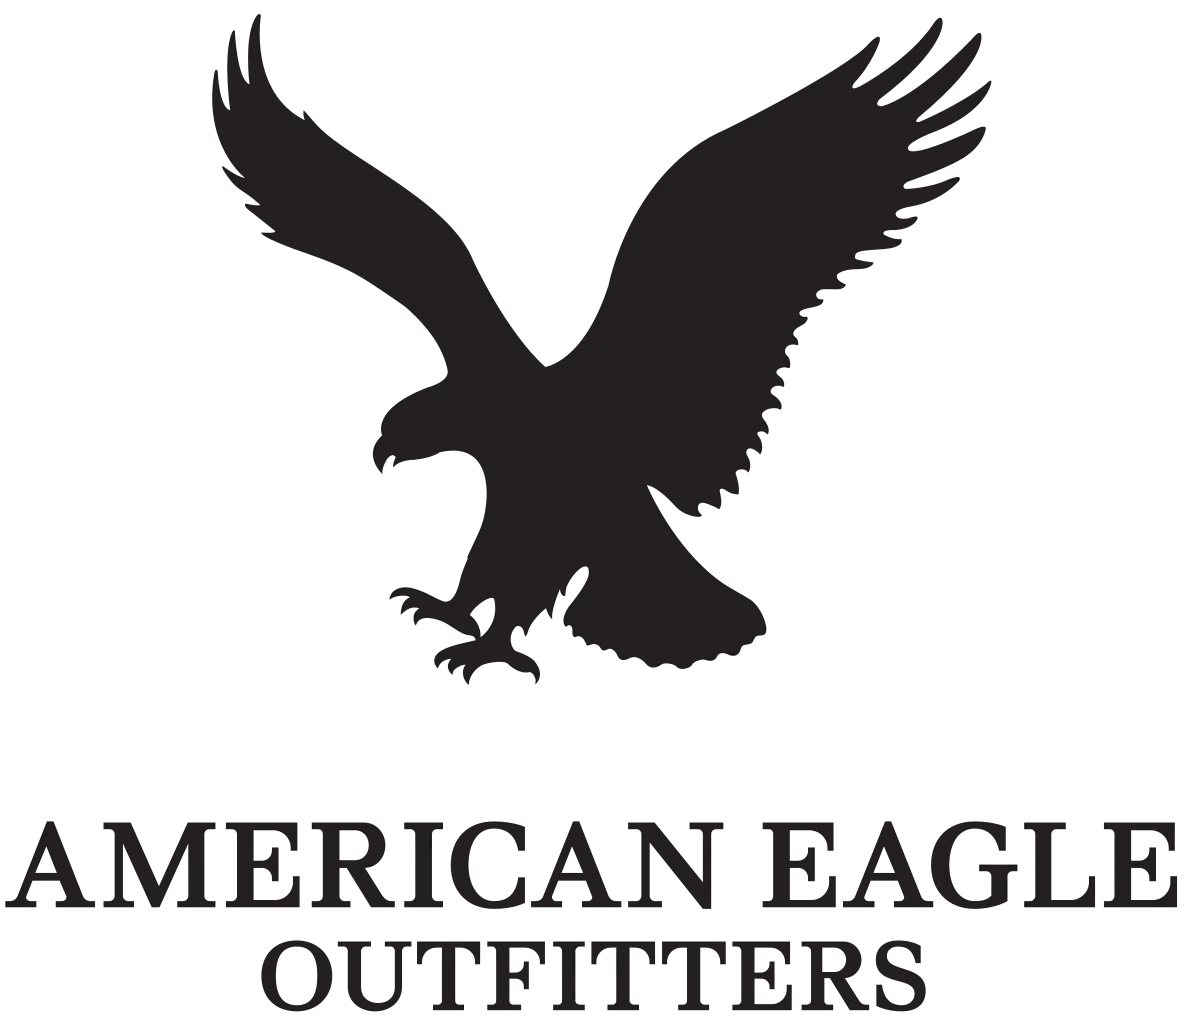 American Eagle DE Promo Code